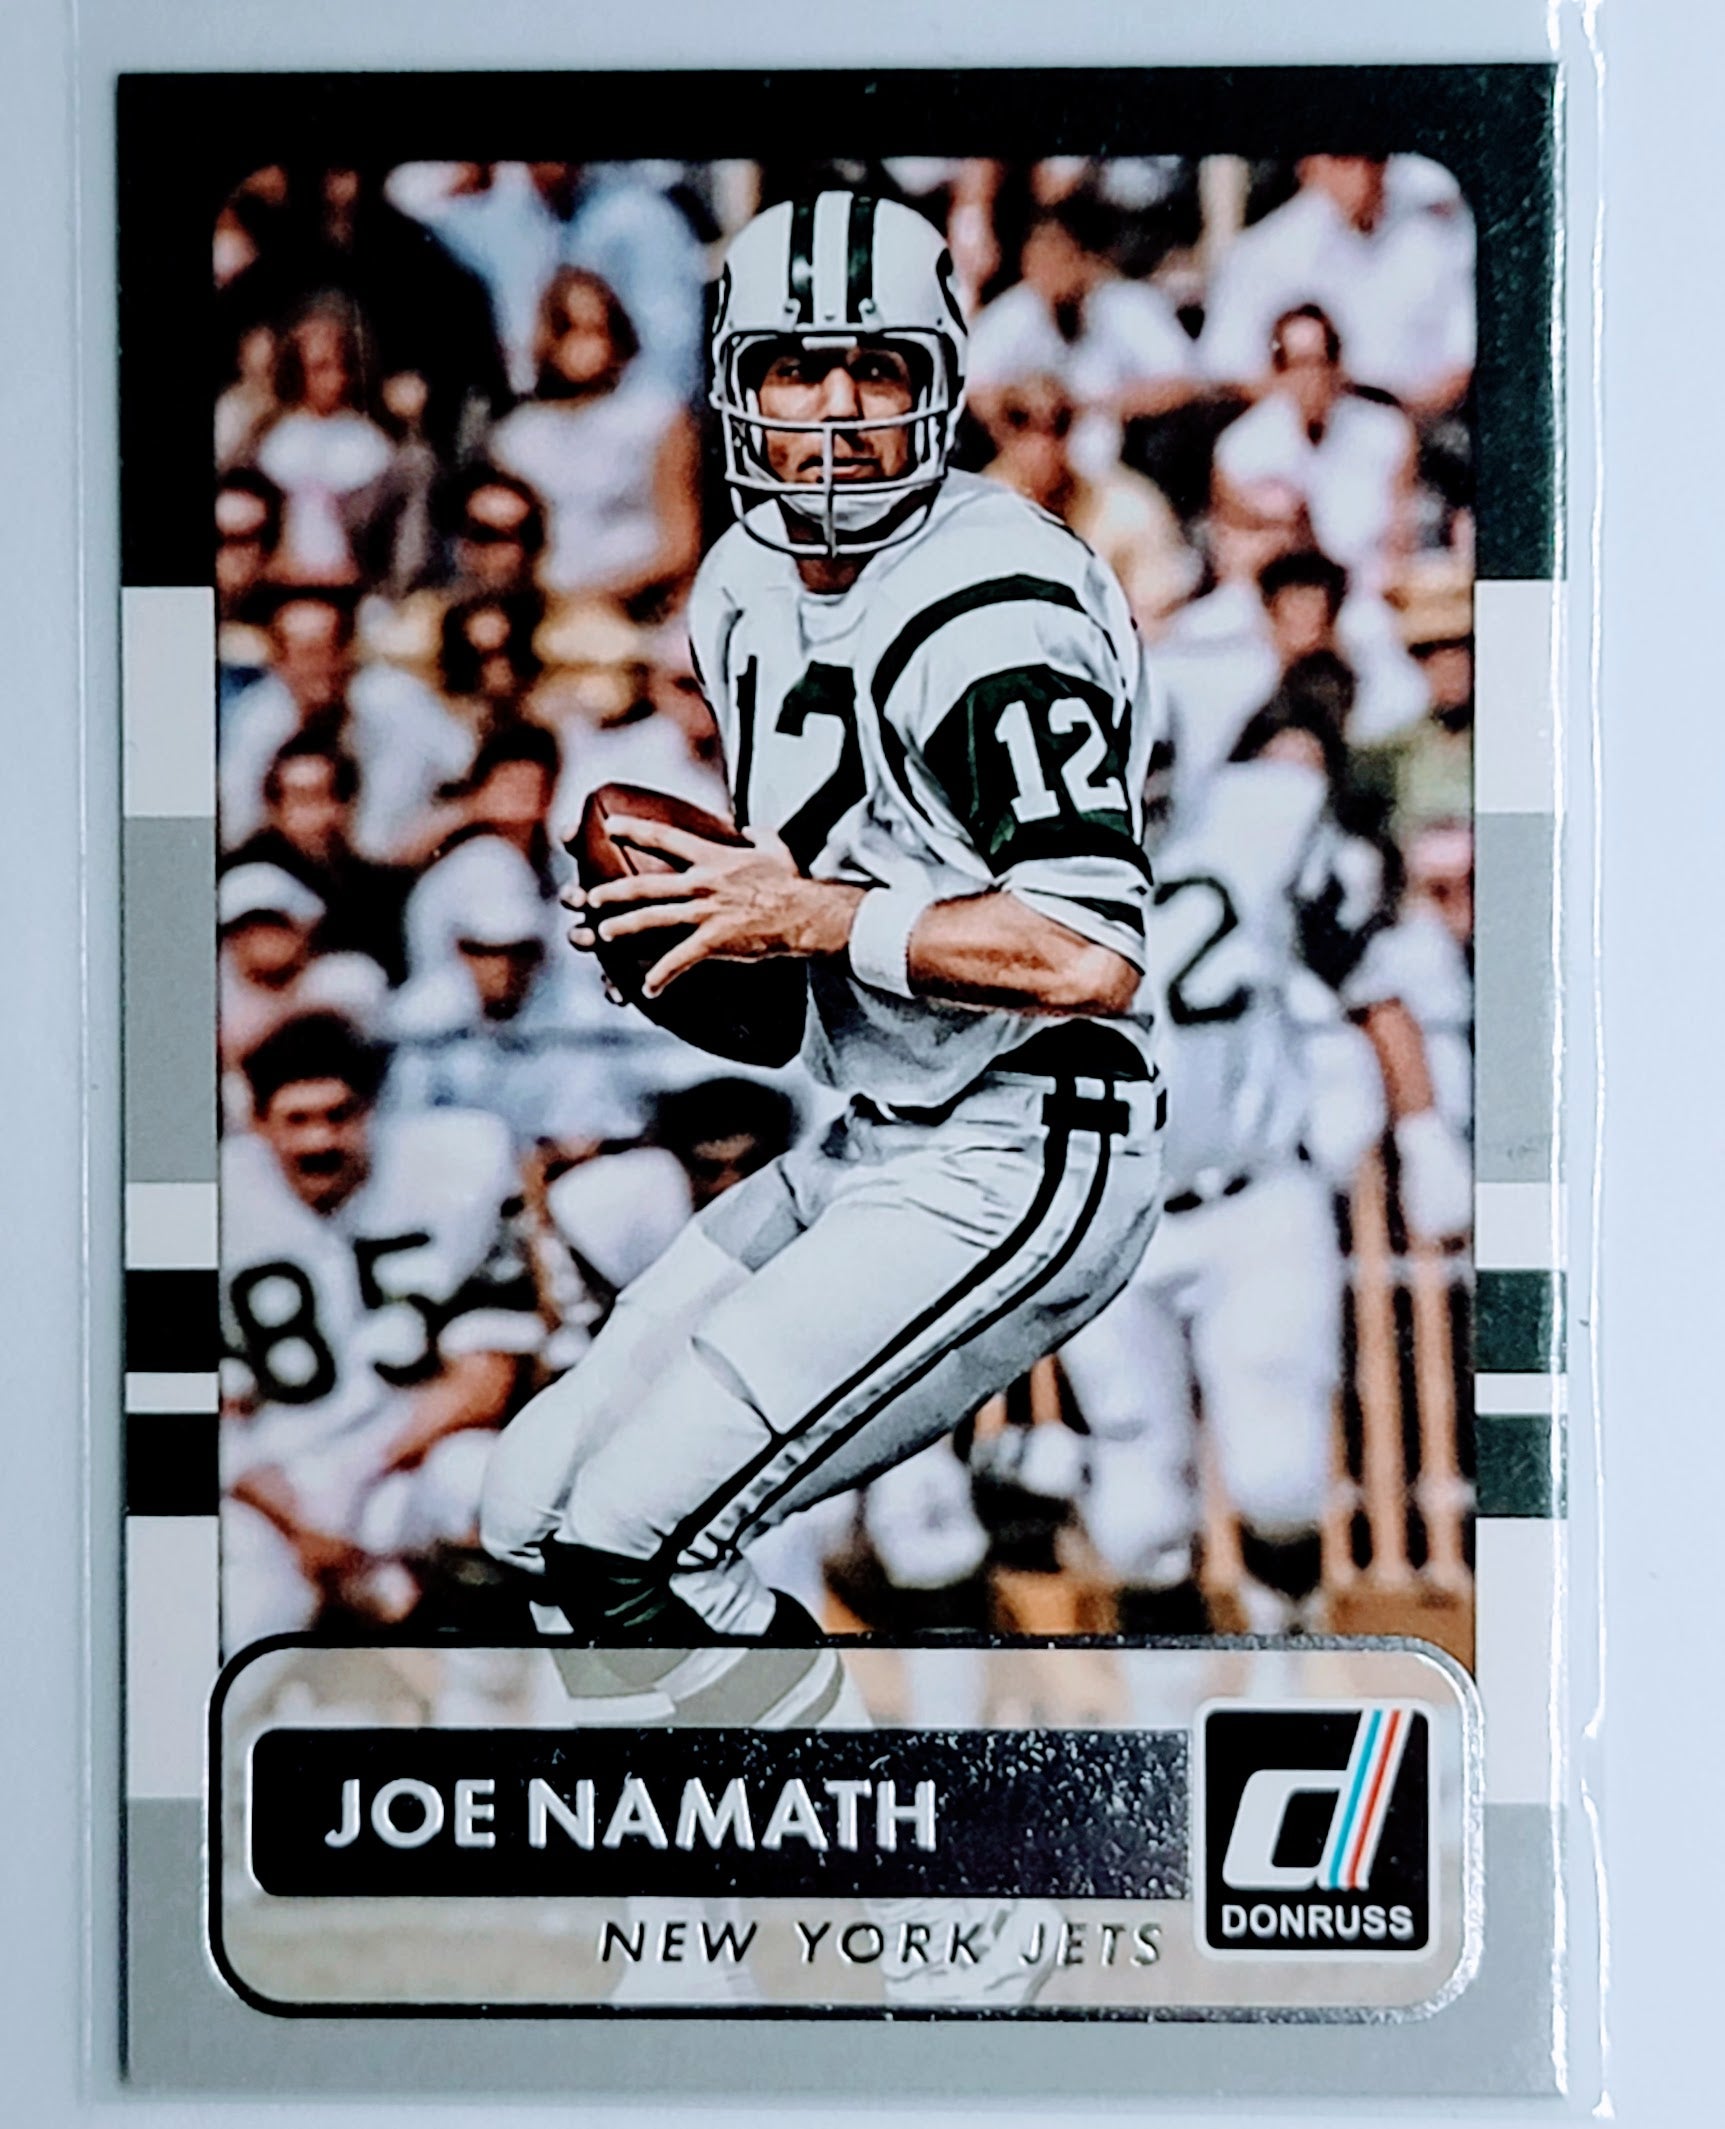 2015 Donruss Joe Namath   New York Jets Football Card  TH1CB simple Xclusive Collectibles   